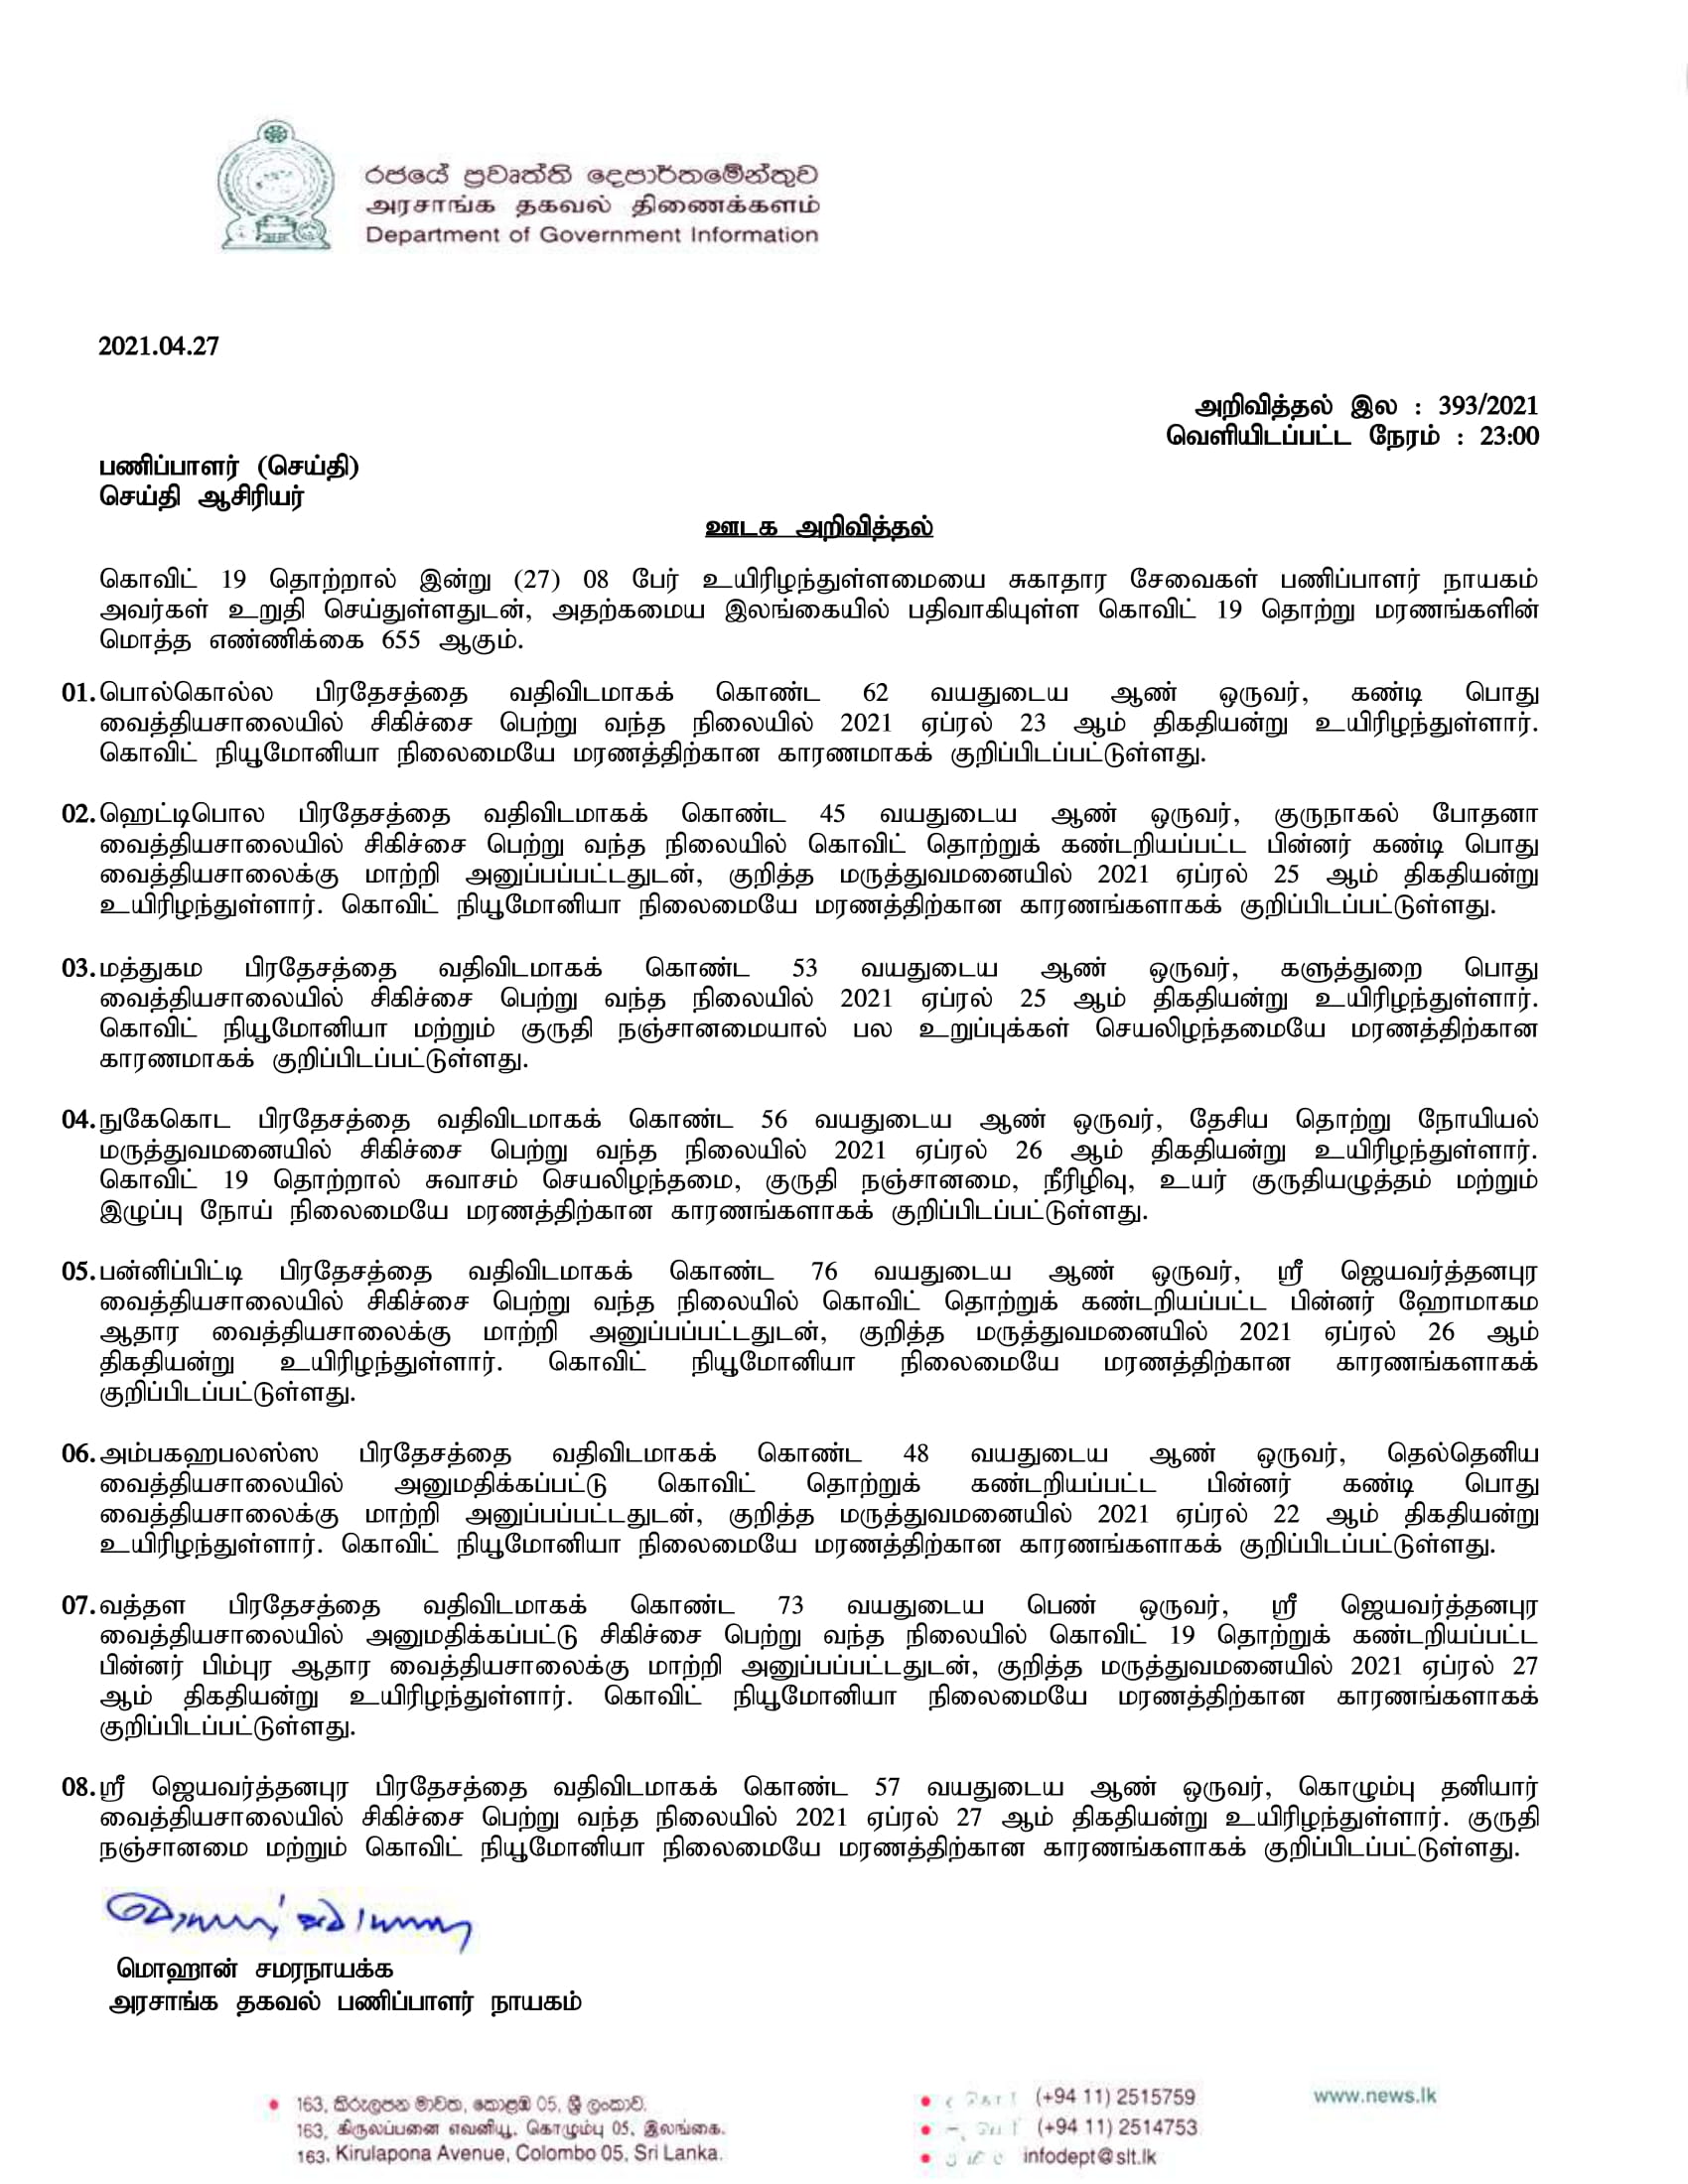 Press Release 393 Tamil 1 1